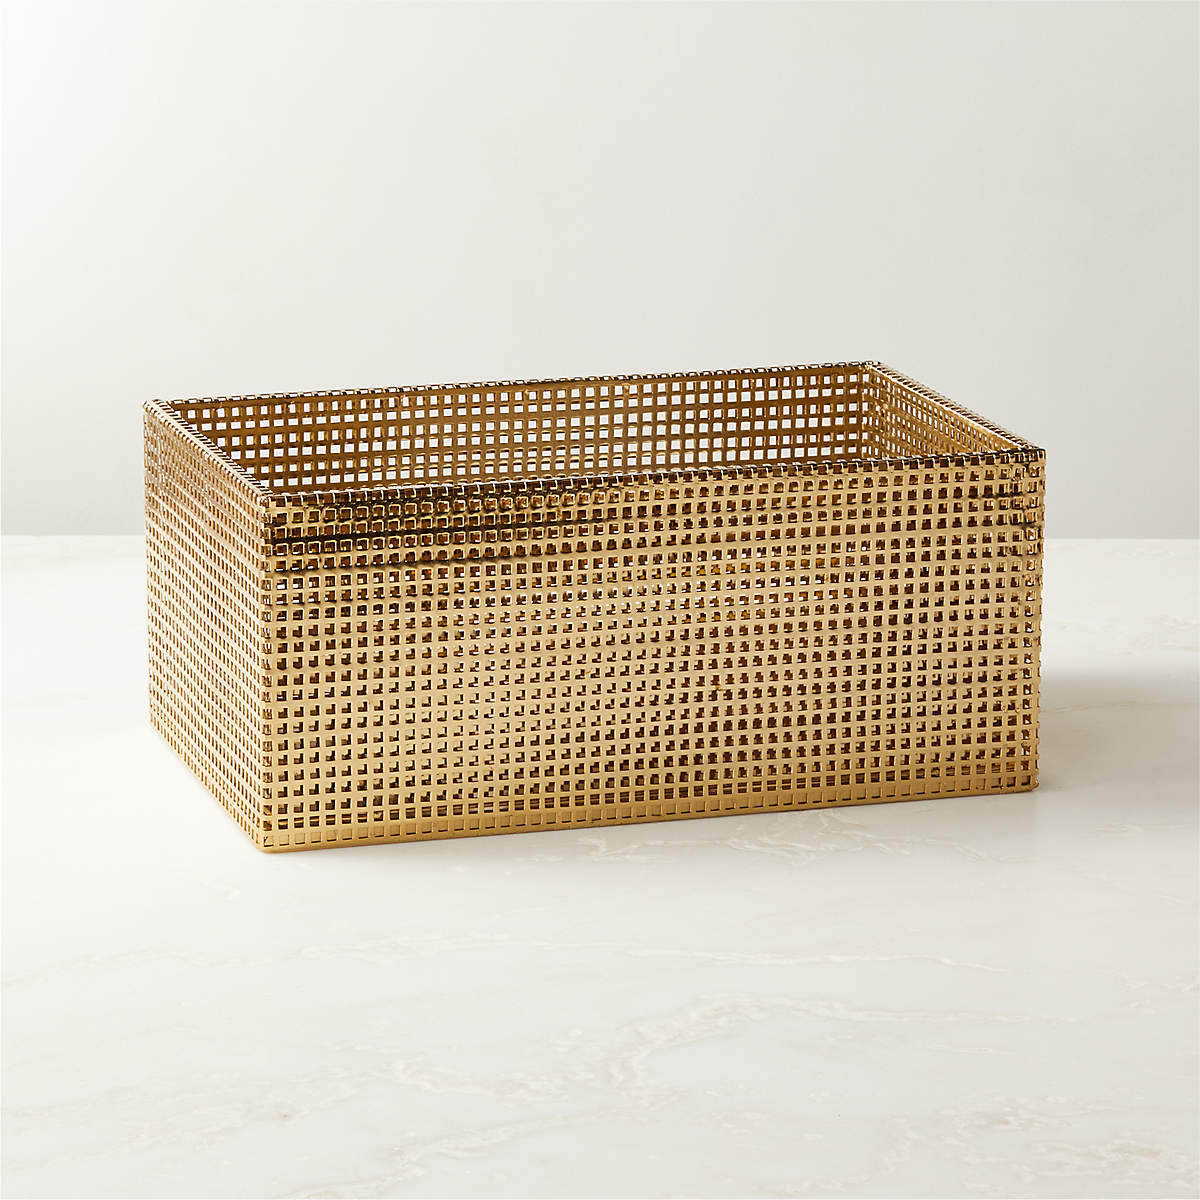 CB2 - Tegan Perforated Brass/Polished Nickel Metal Storage Basket - Organizer - Small/Medium